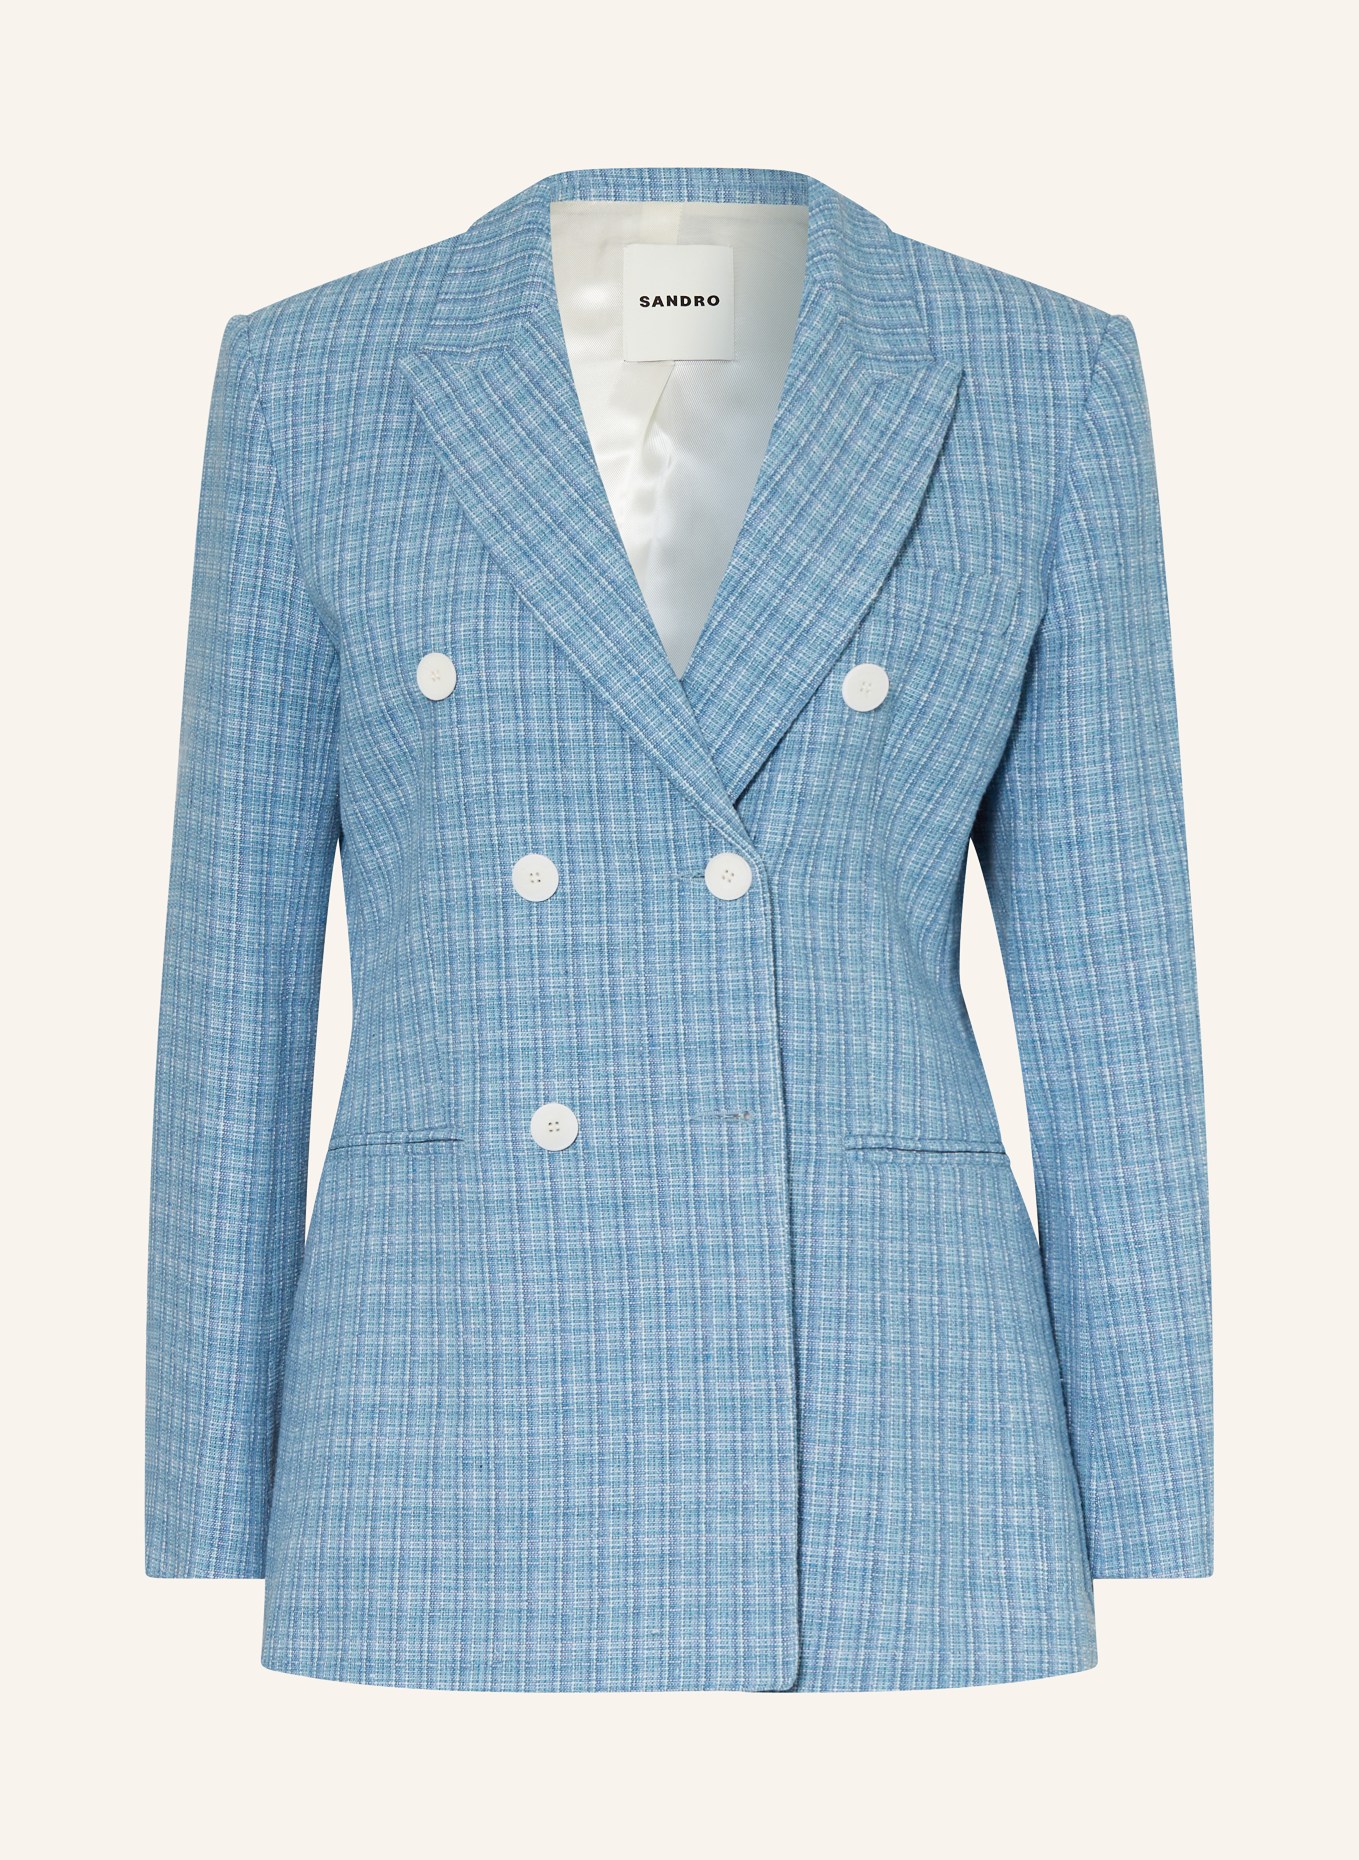 SANDRO Tweed-Blazer, Farbe: HELLBLAU (Bild 1)